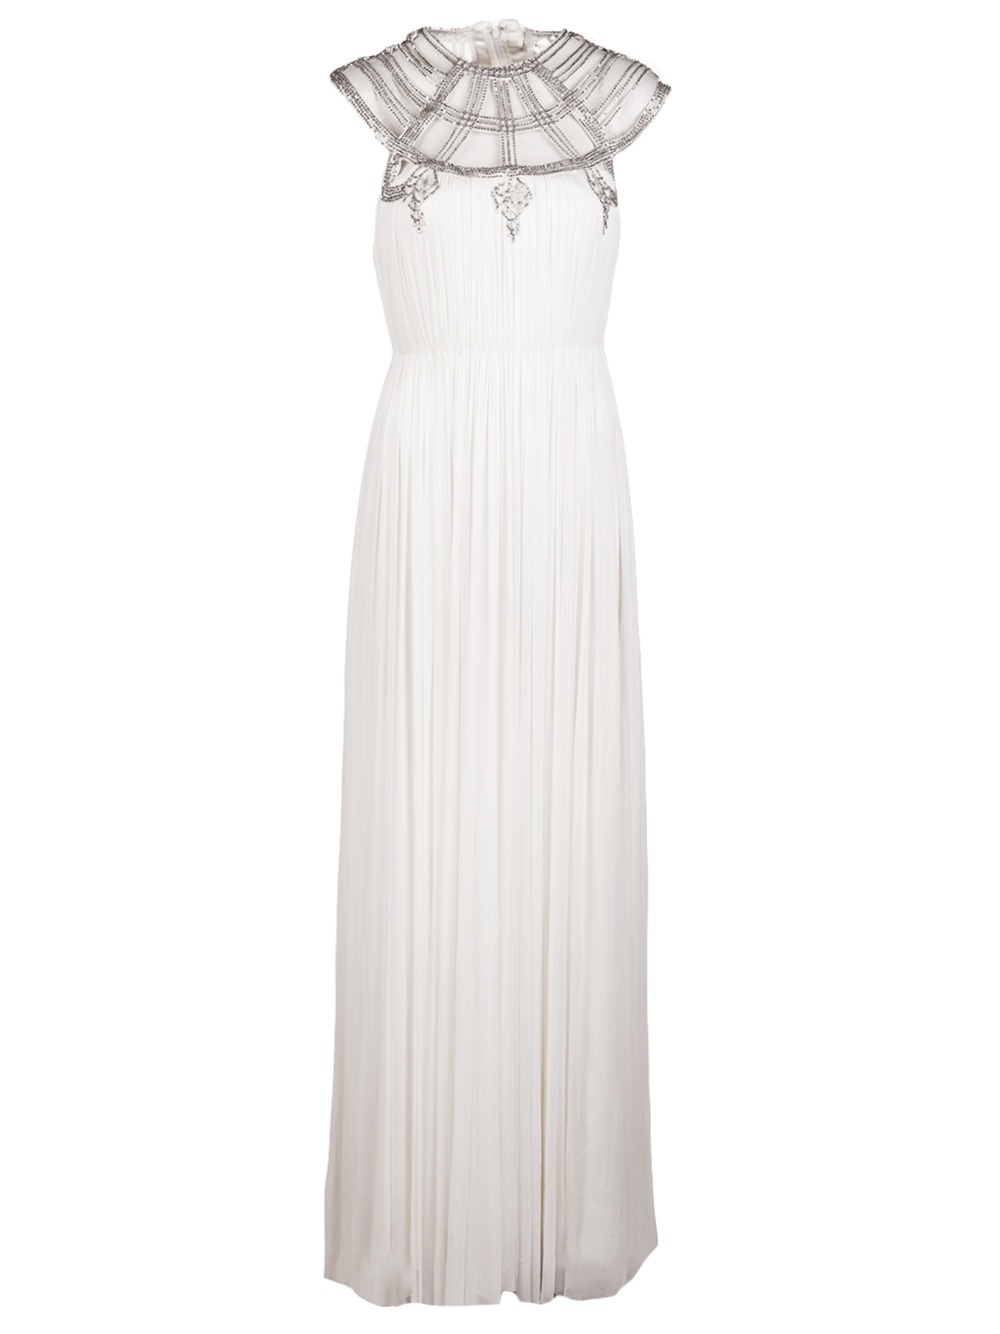 Lyst - Catherine Deane Mona Bead Yoke Gown in White